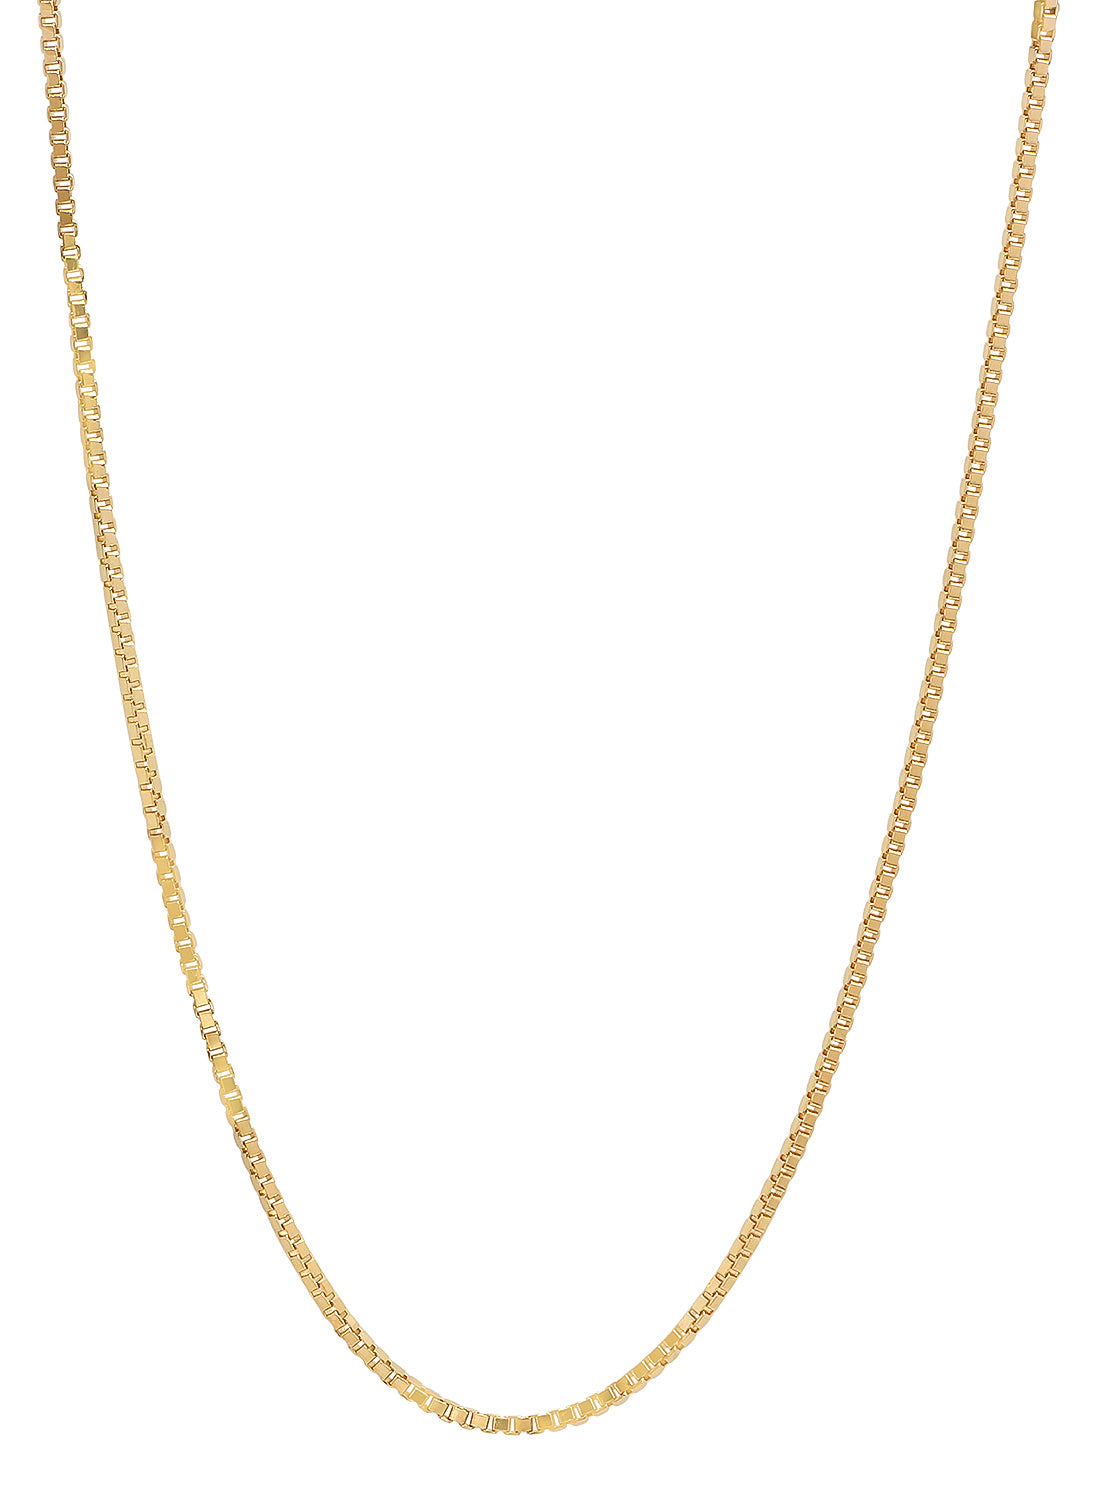 Gold Plated Heart Shaped Slider Pendant w/Light Pink Pave CZs + Jewelry Polishing Cloth (SKU: GL-CZP416-SET)